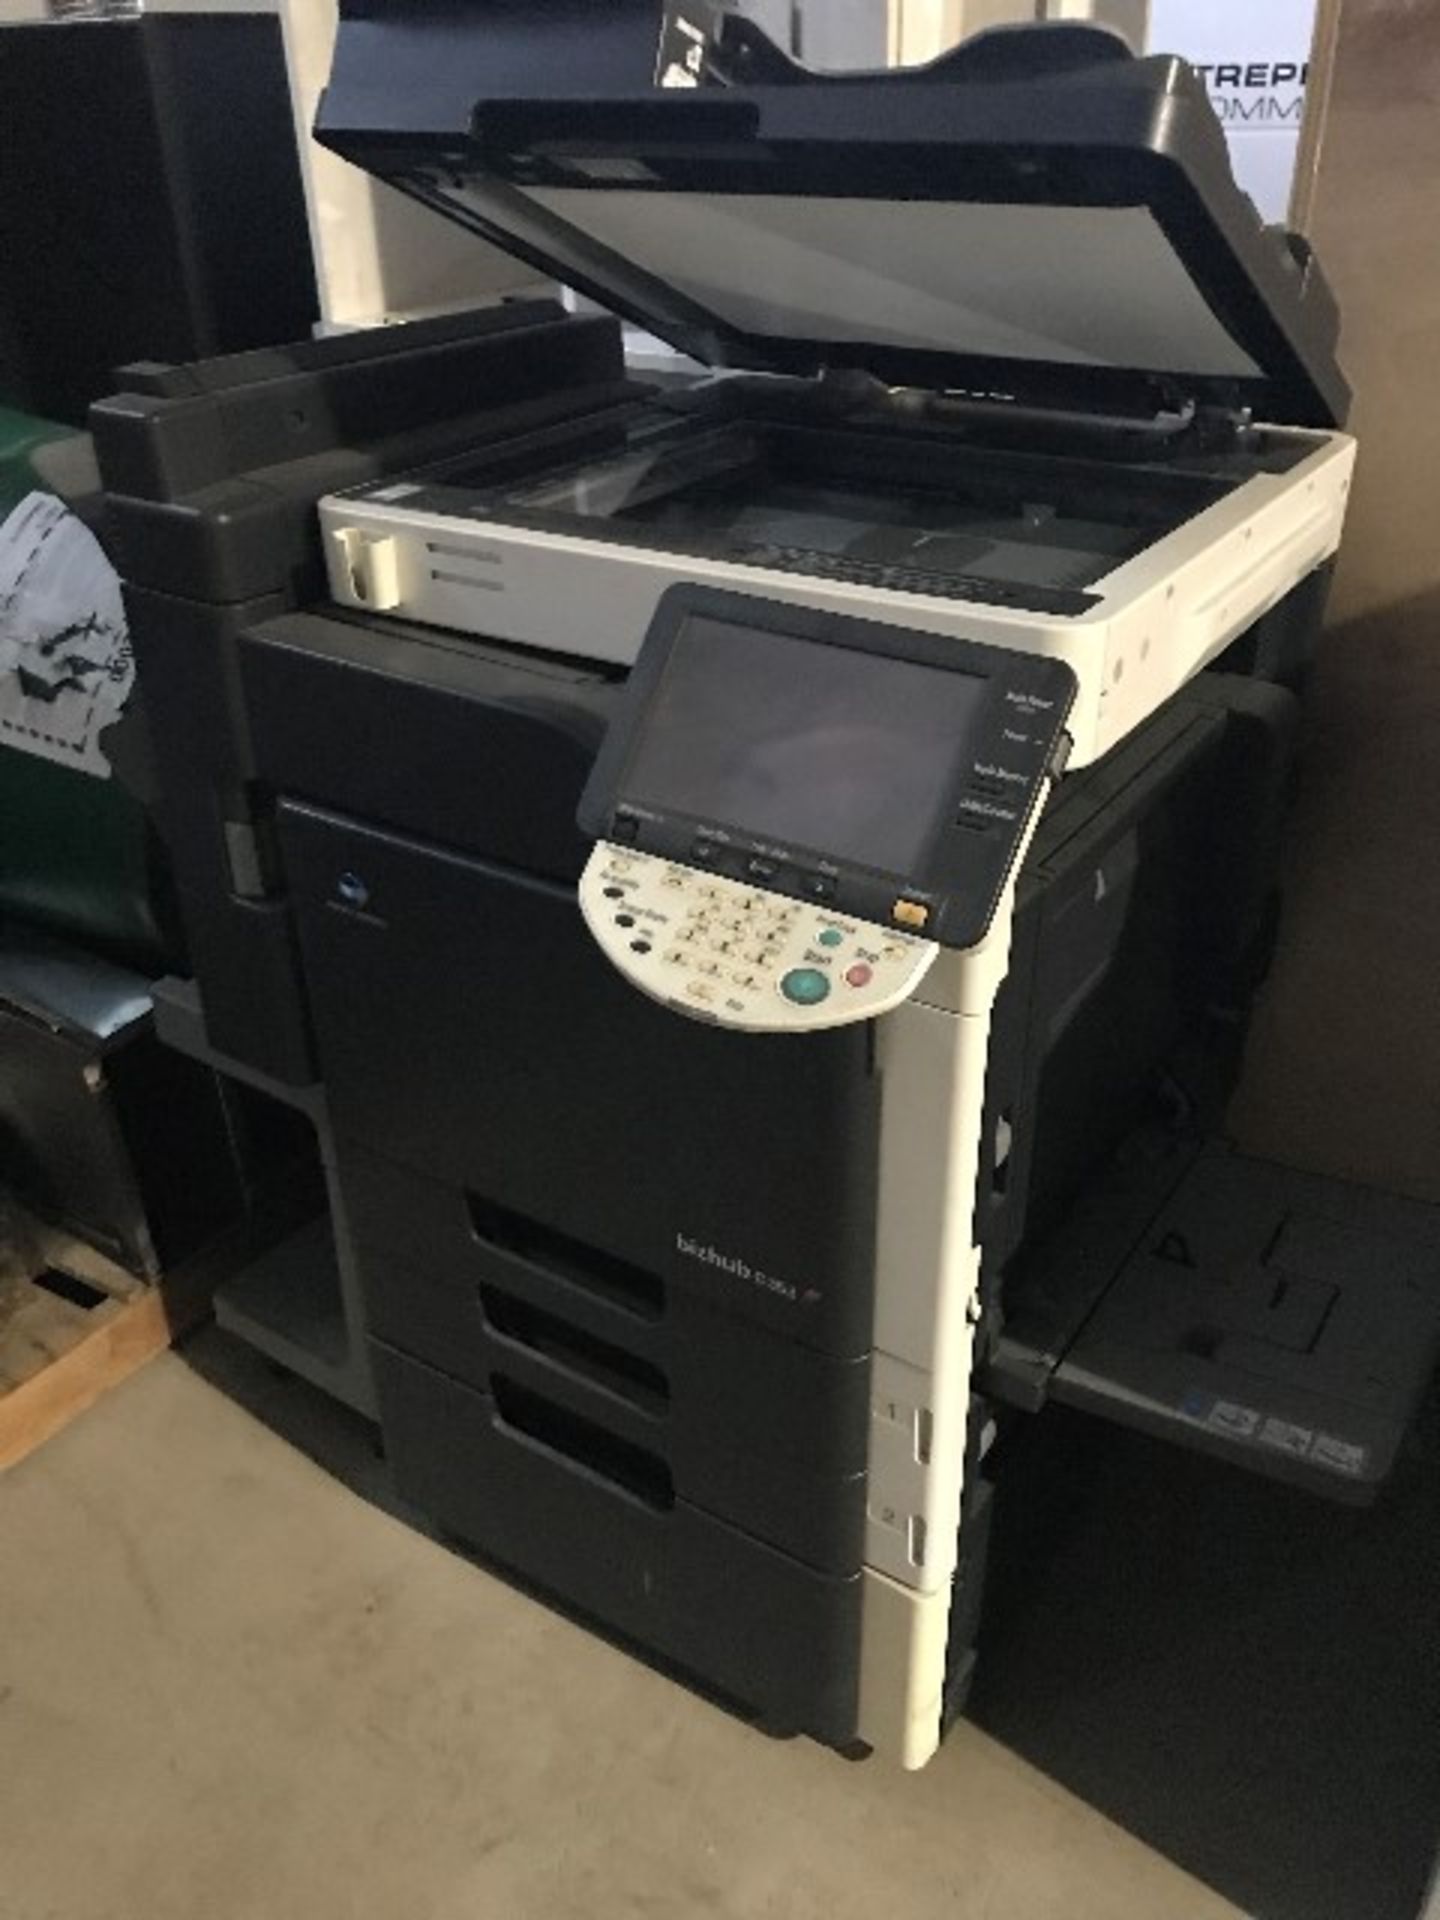 Konica Minolta bizhub C353 copier/printer - Image 2 of 2